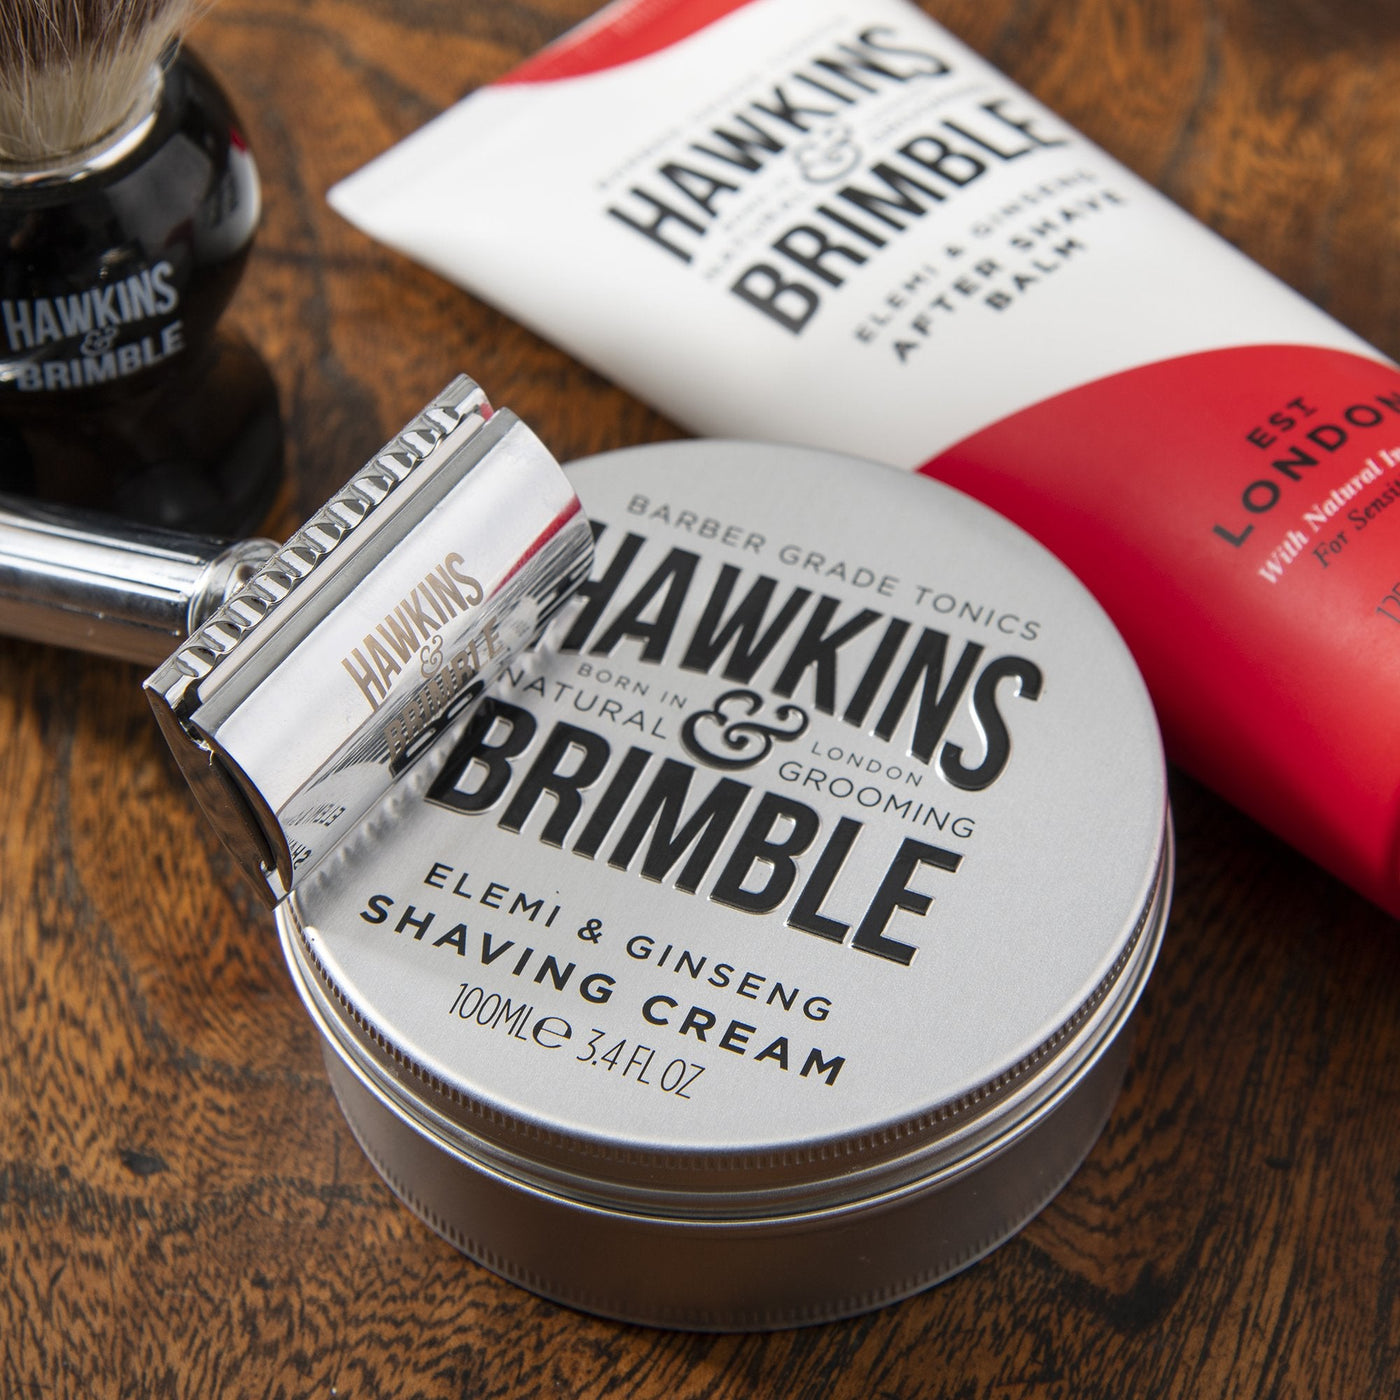 Shaving Cream 100ml - Shaving - Hawkins & Brimble Barbershop Male Grooming Products for Beards and Hair